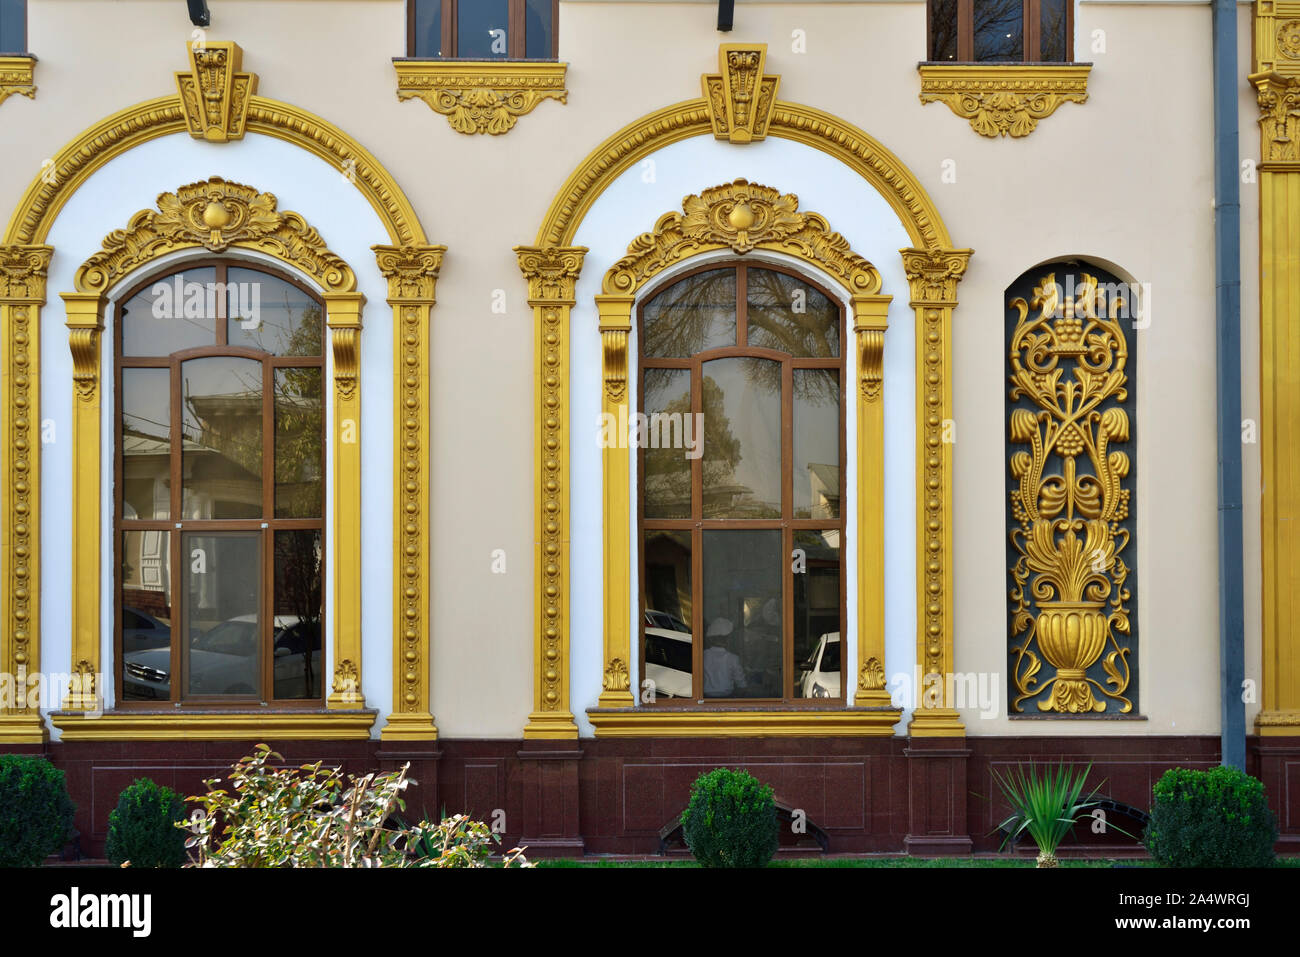 Facade of the Samarkand Restaurant, one of the best restaurants in Samarkand. Uzbekistan Stock Photo